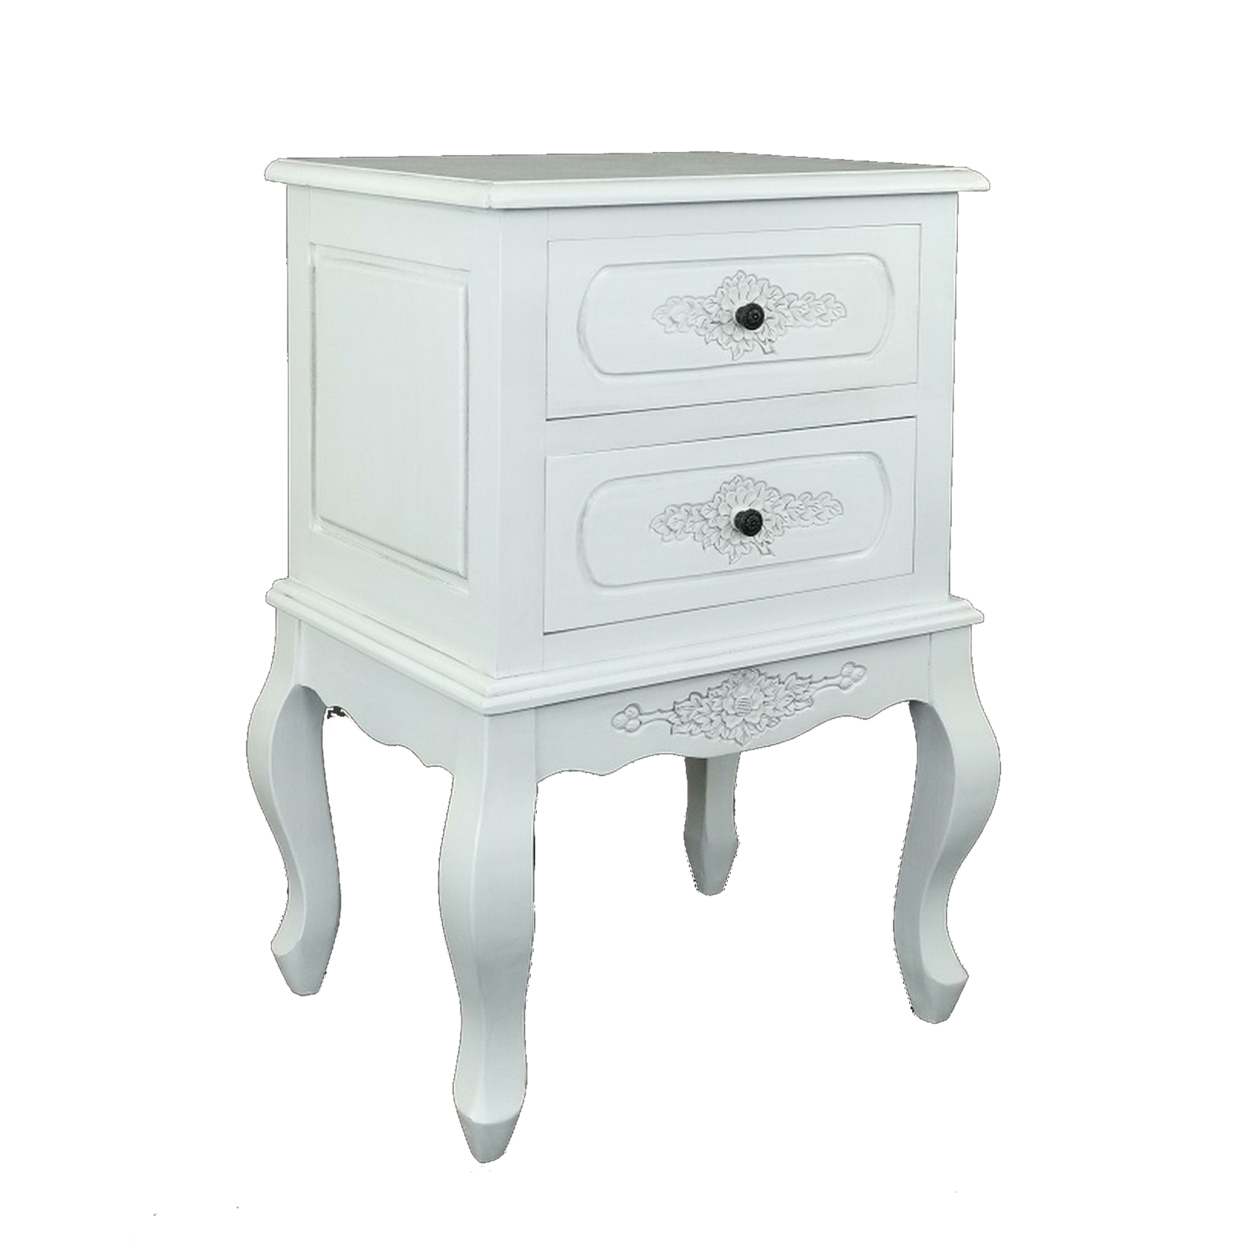 Mary 27 Inch Classic Wood Square Cabinet Table, 2 Drawers, Floral, White- Saltoro Sherpi- Saltoro Sherpi